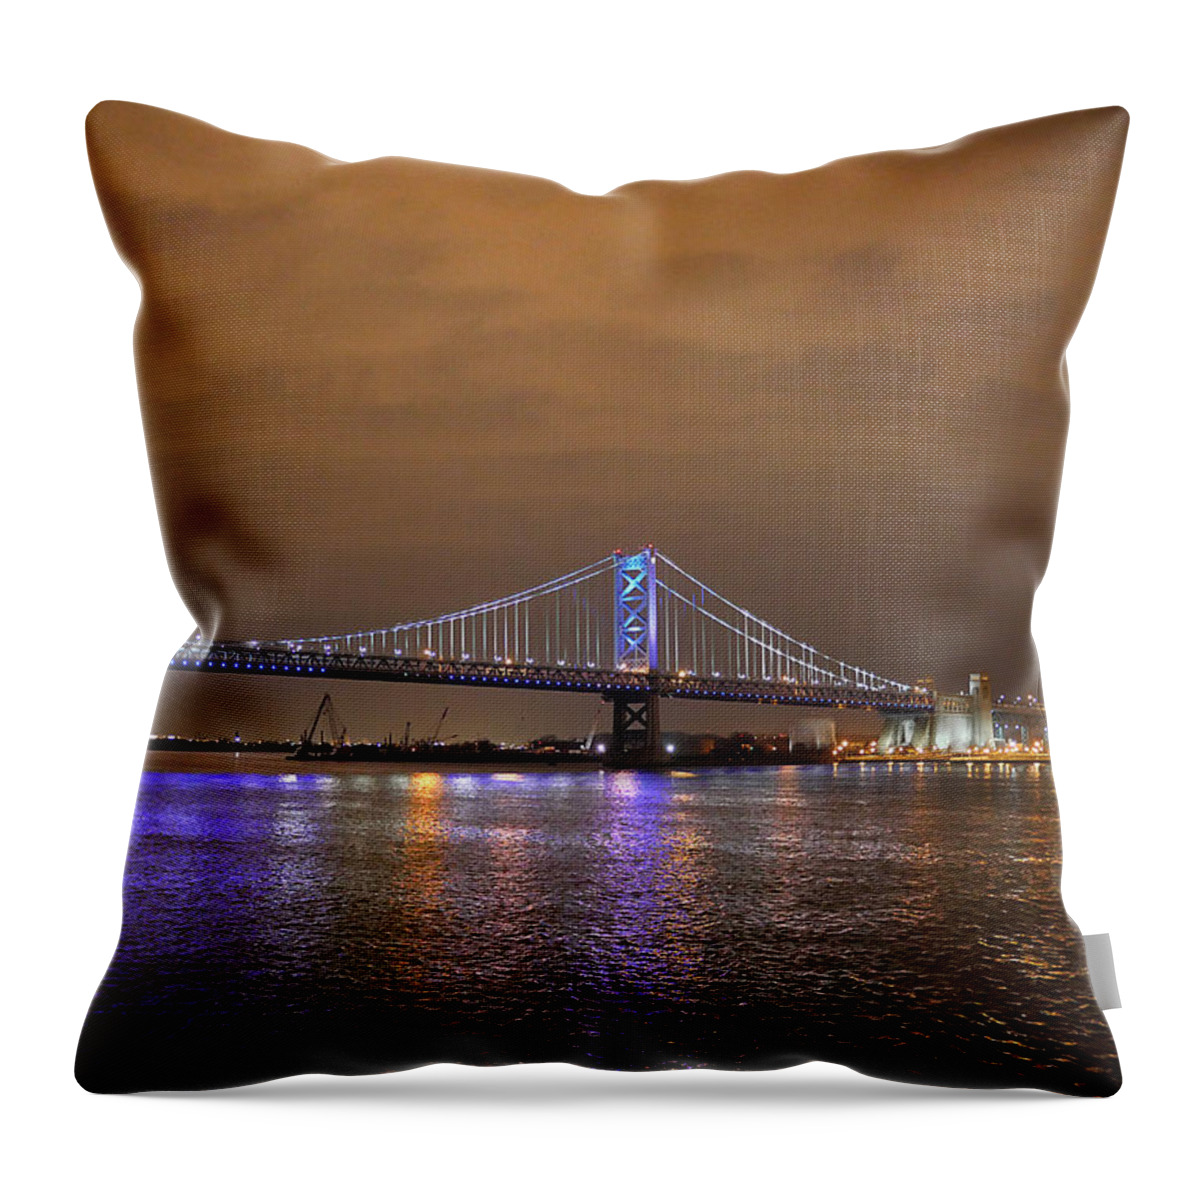 Richard Reeve Throw Pillow featuring the photograph Philadelphia - Ben Franklin Bridge at Night by Richard Reeve